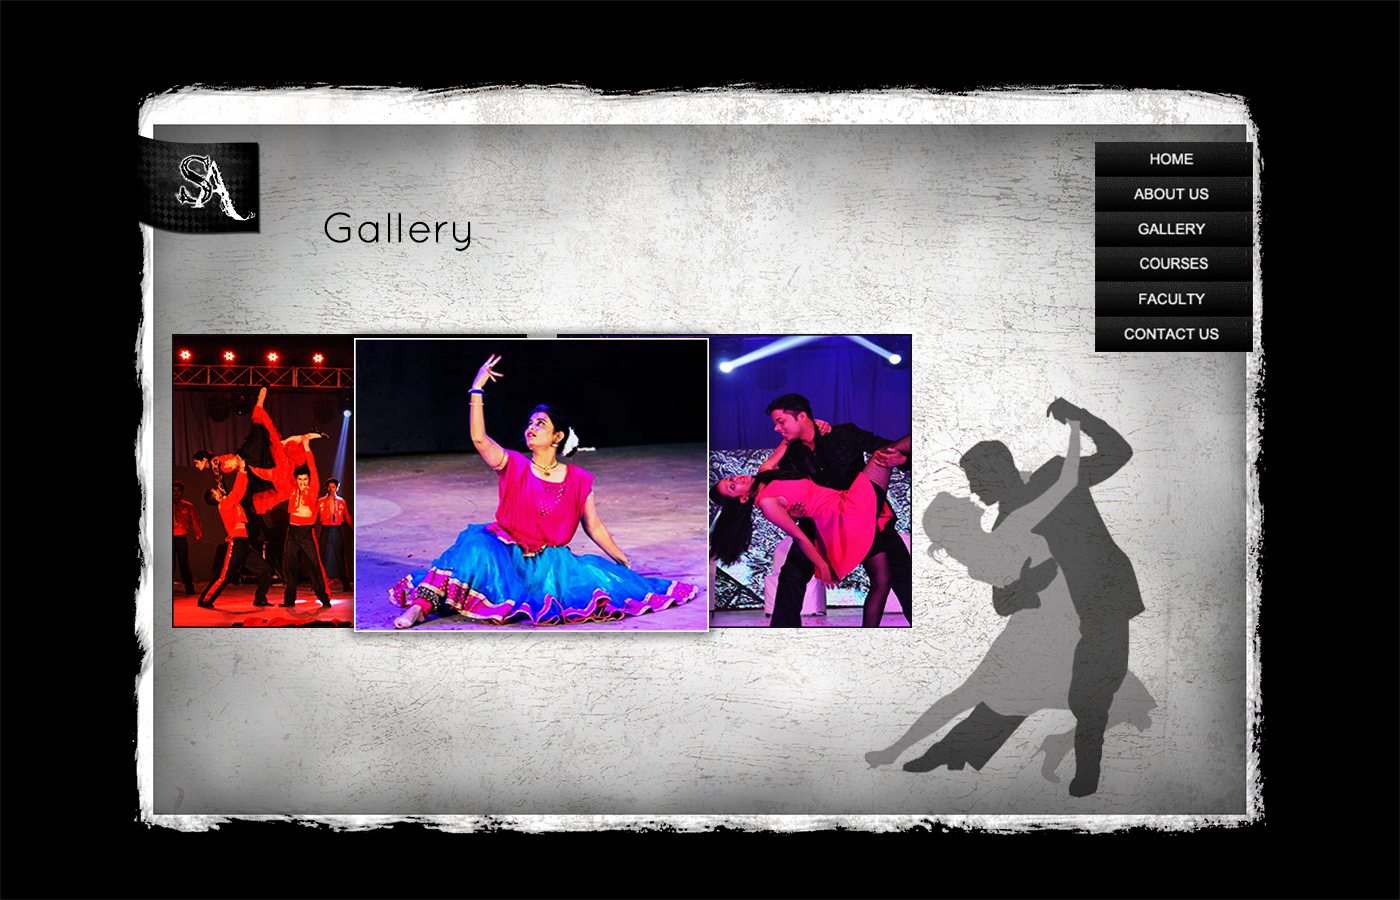 Safwana web mockup Web UI photoshop Adobe Photoshop Website Design user interface Music & Dance Music & DanceSchool website for music Website for Dance design Music School Web